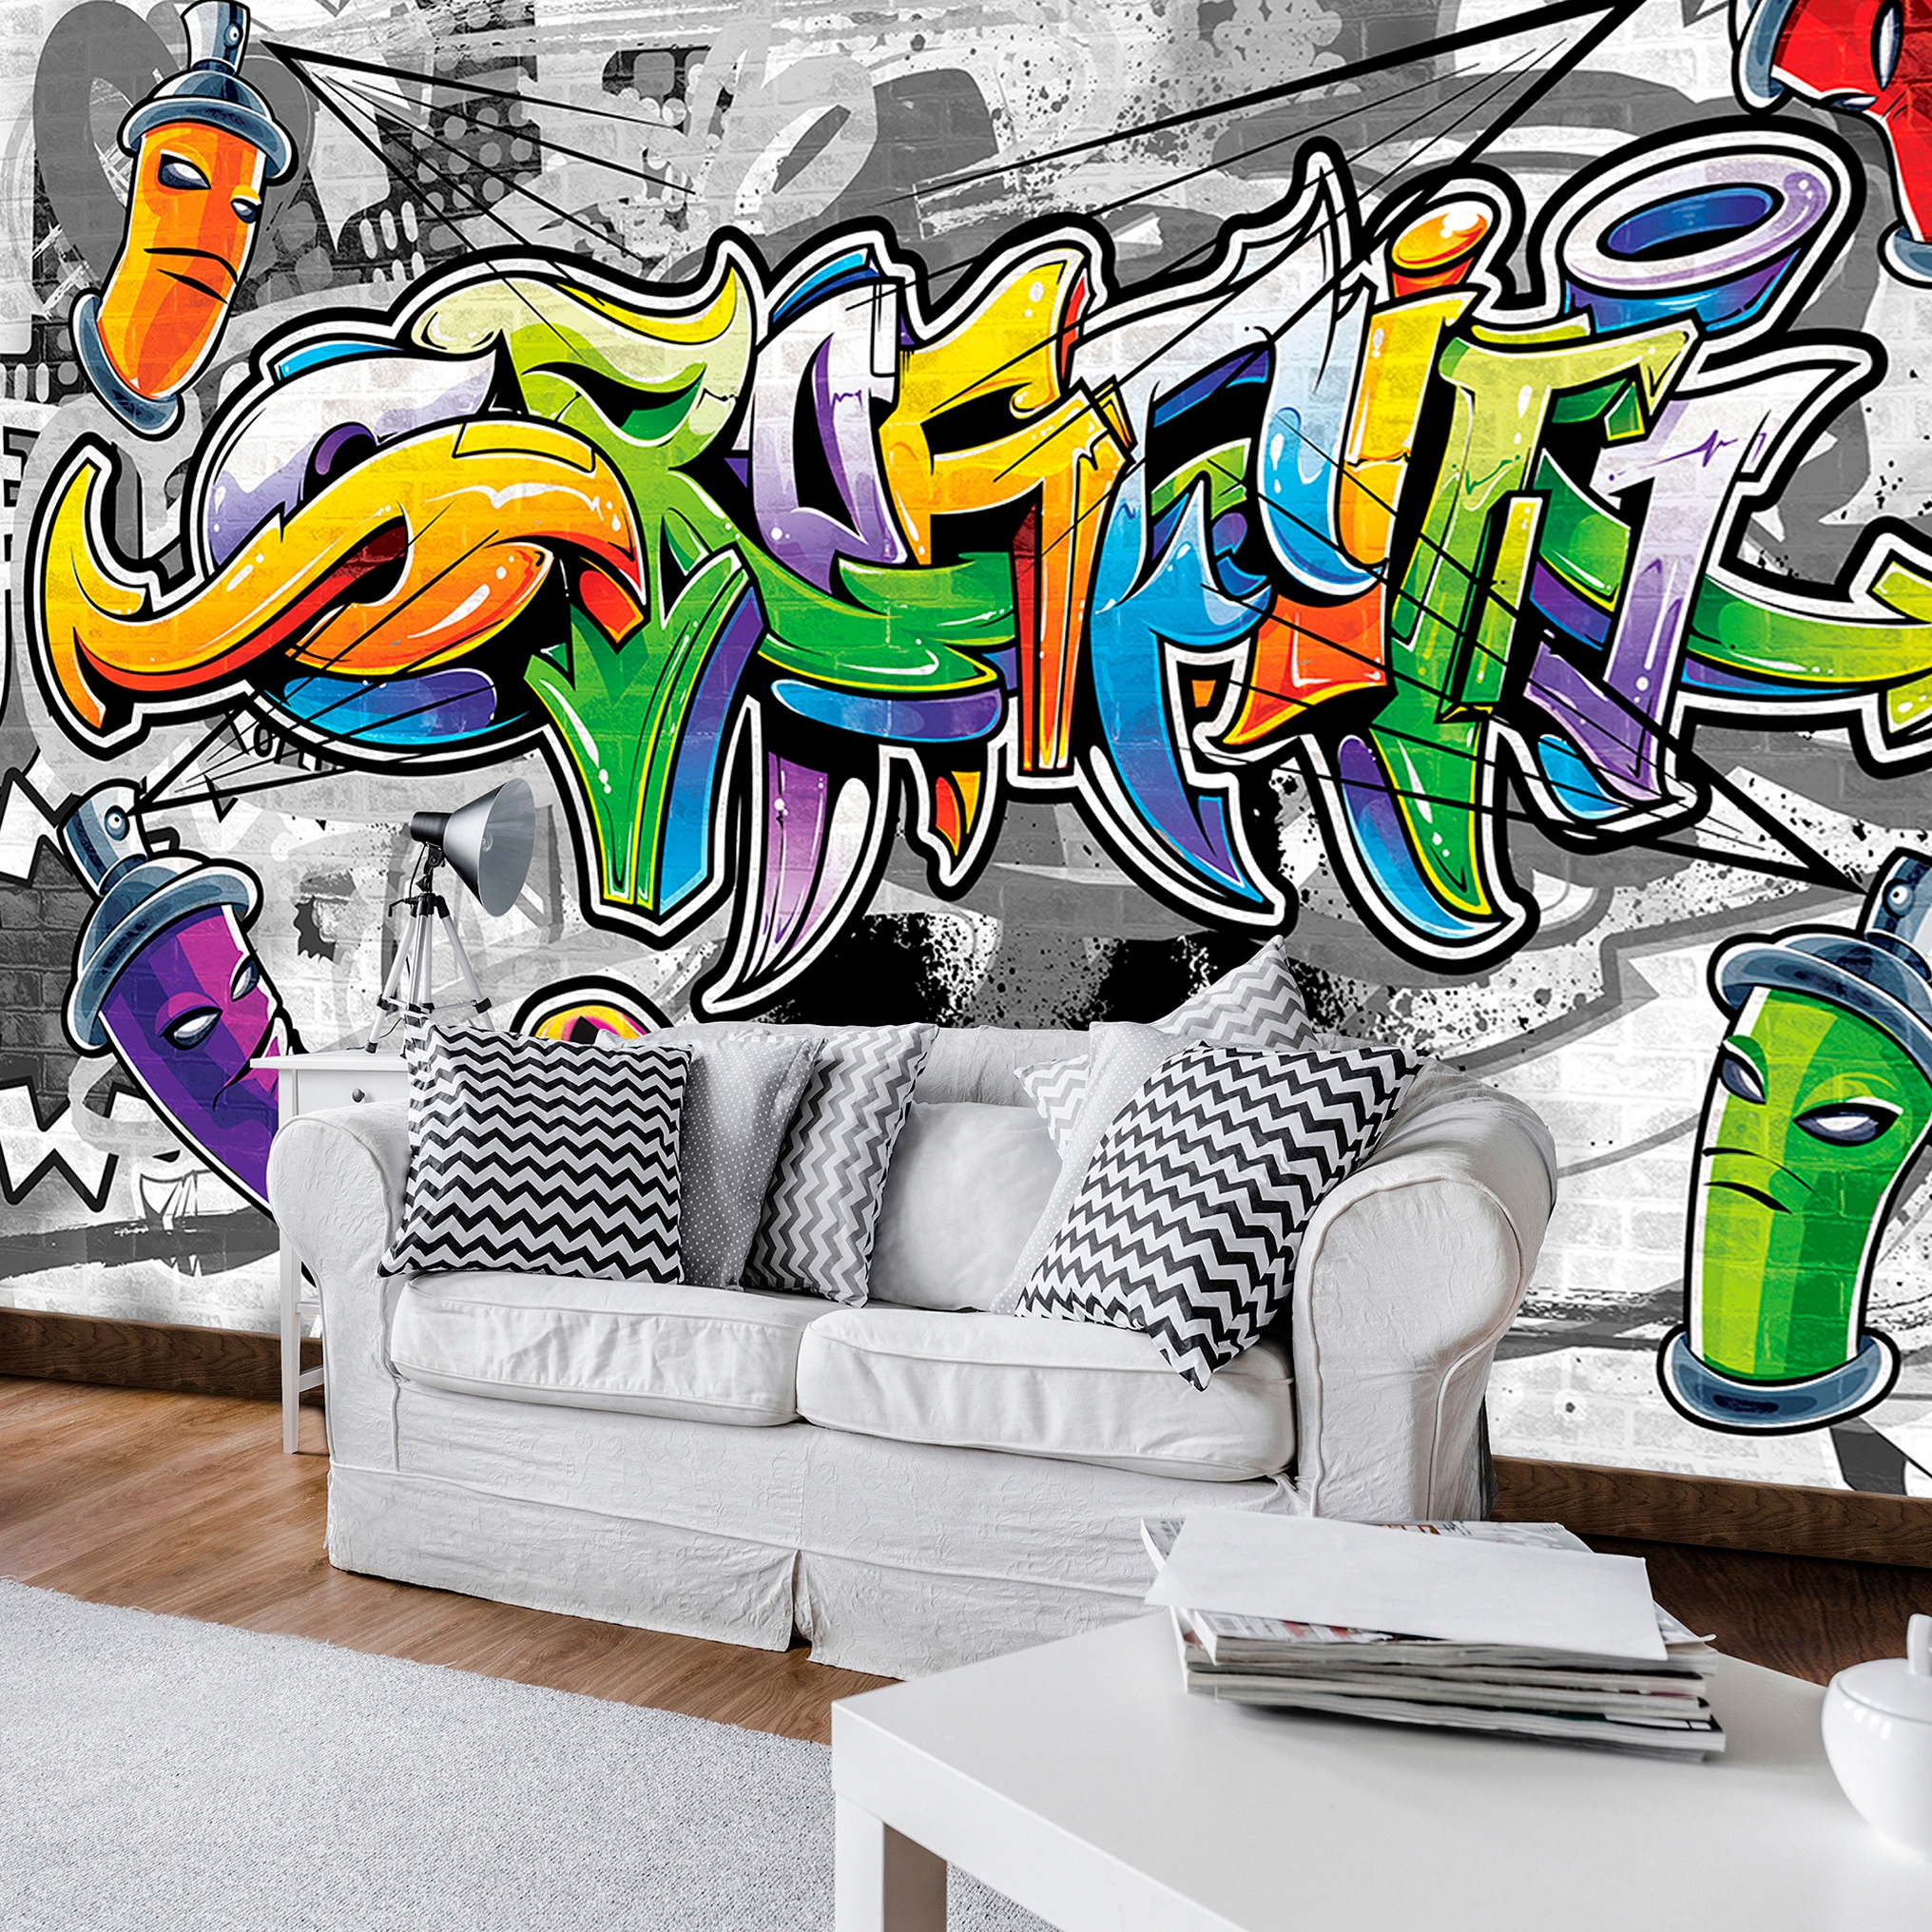 Consalnet Fototapete »Buntes Graffiti«, Motiv auf Raten kaufen